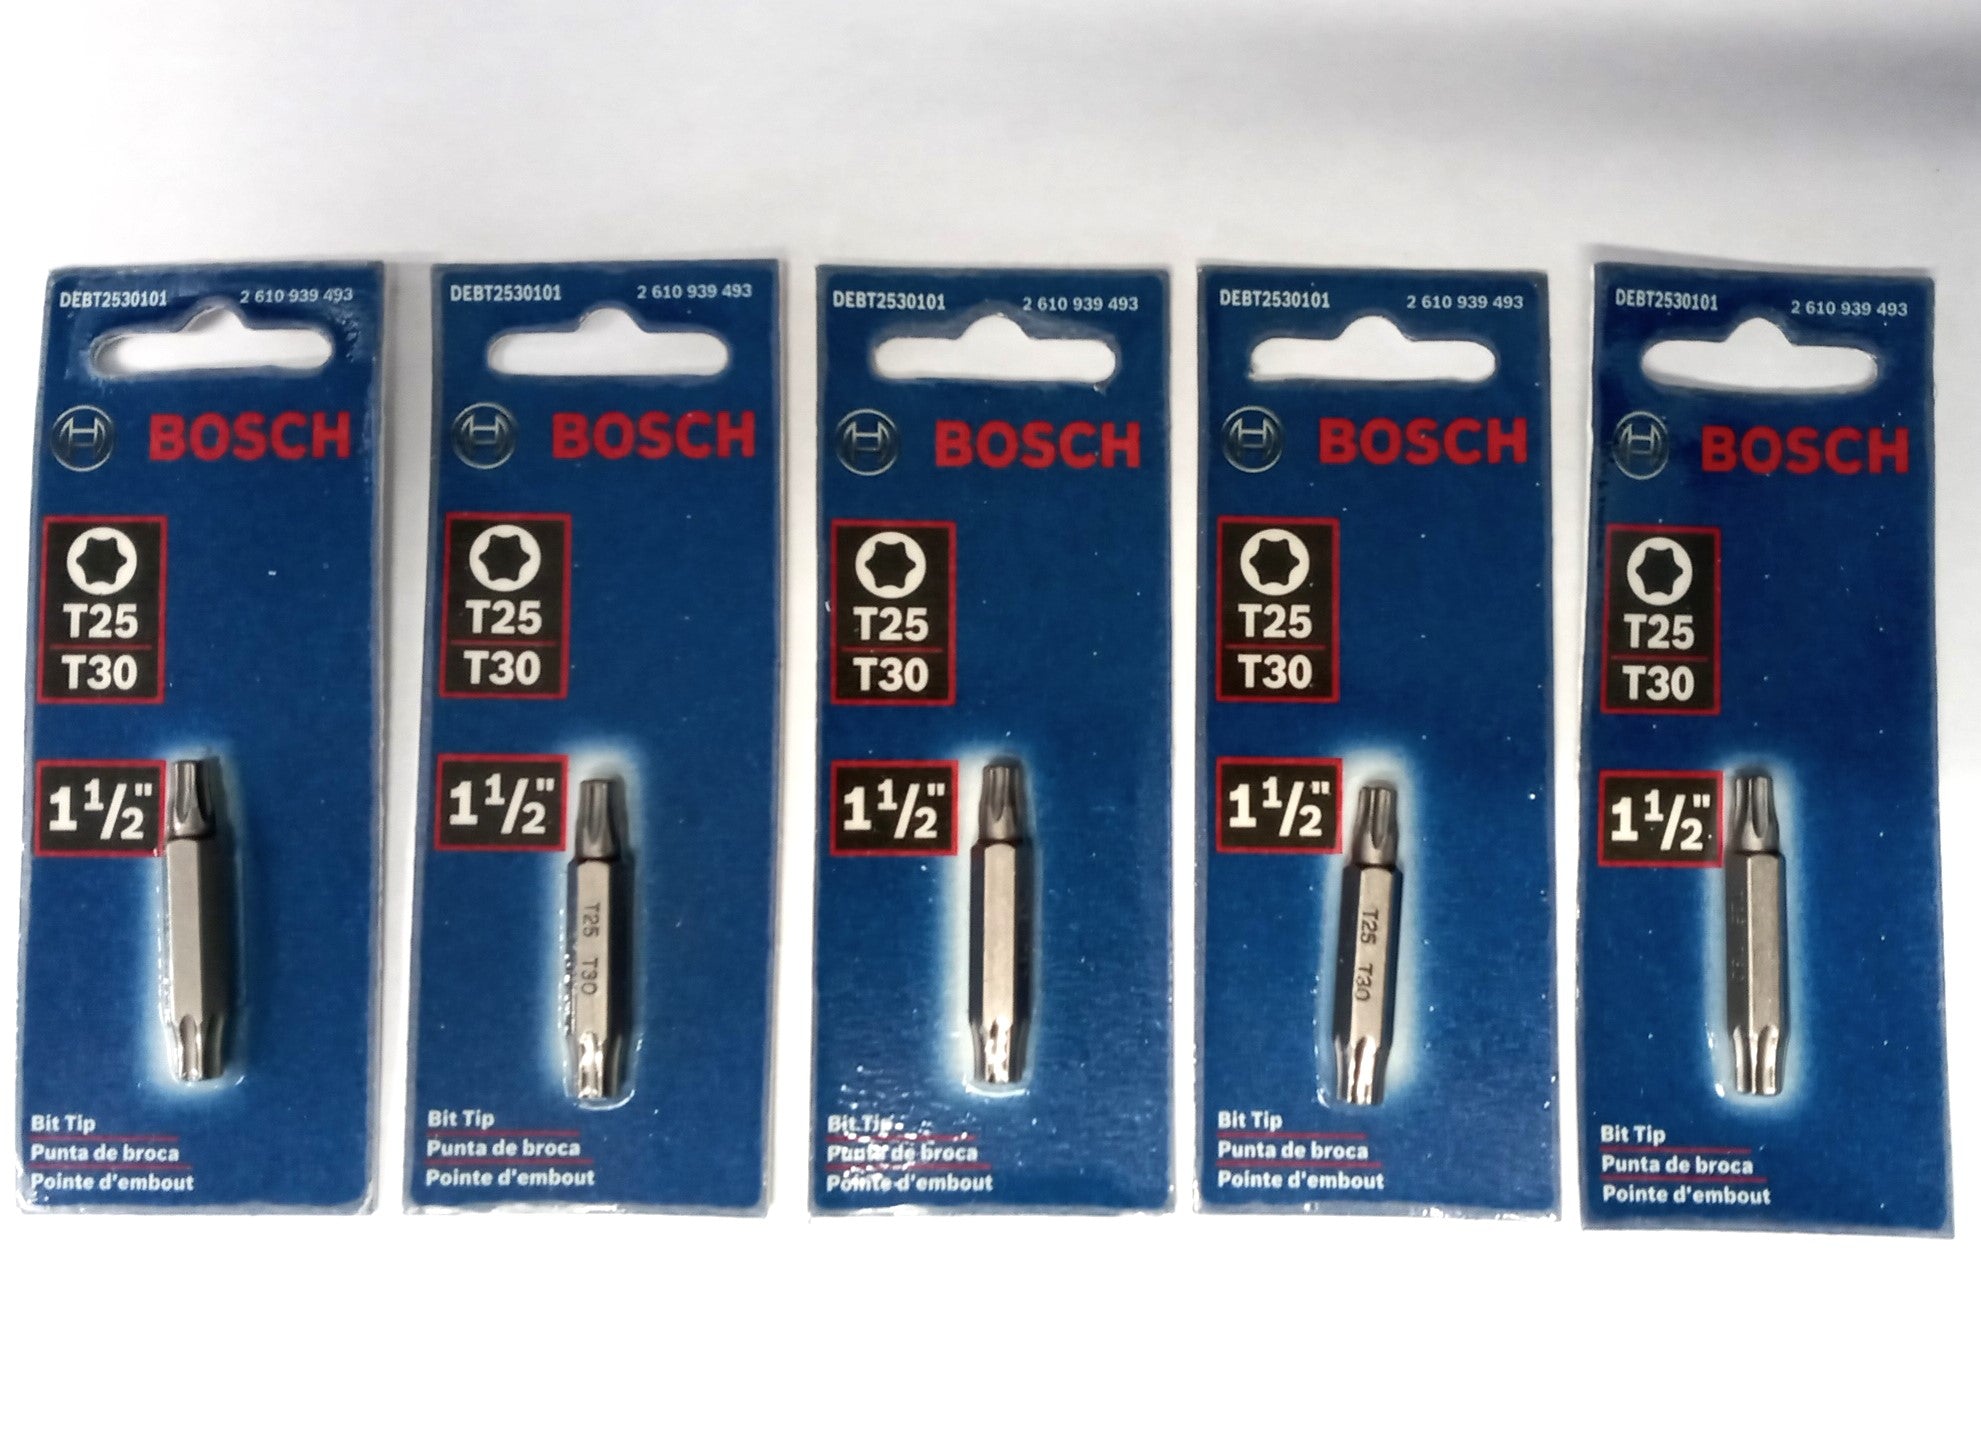 Bosch DEBT2530101 T25/T30 1-1/2" Double End Torx Bit Tips USA 5pcs